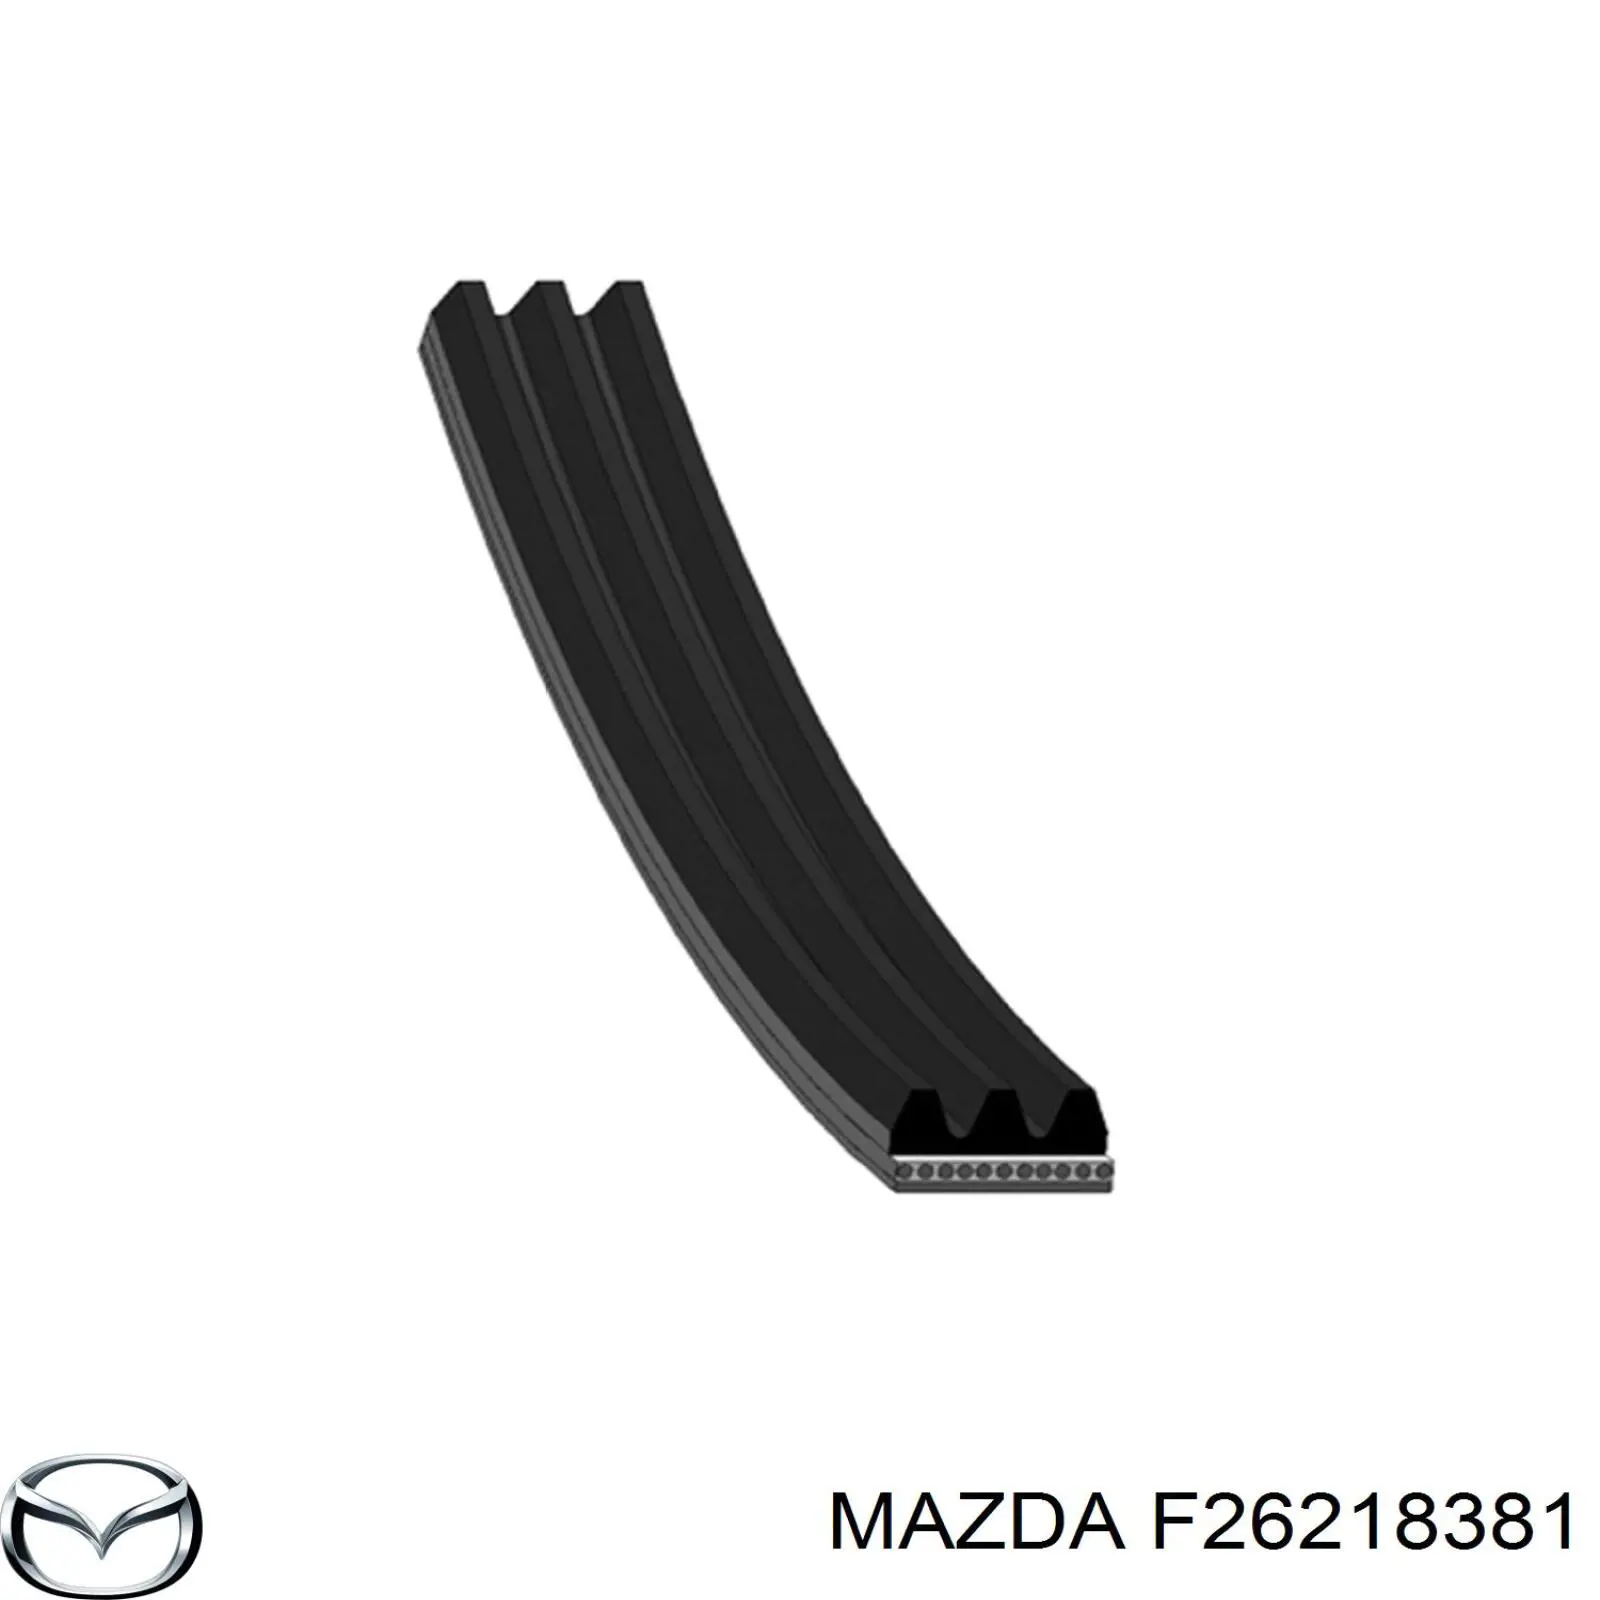 F26218381 Mazda correa trapezoidal